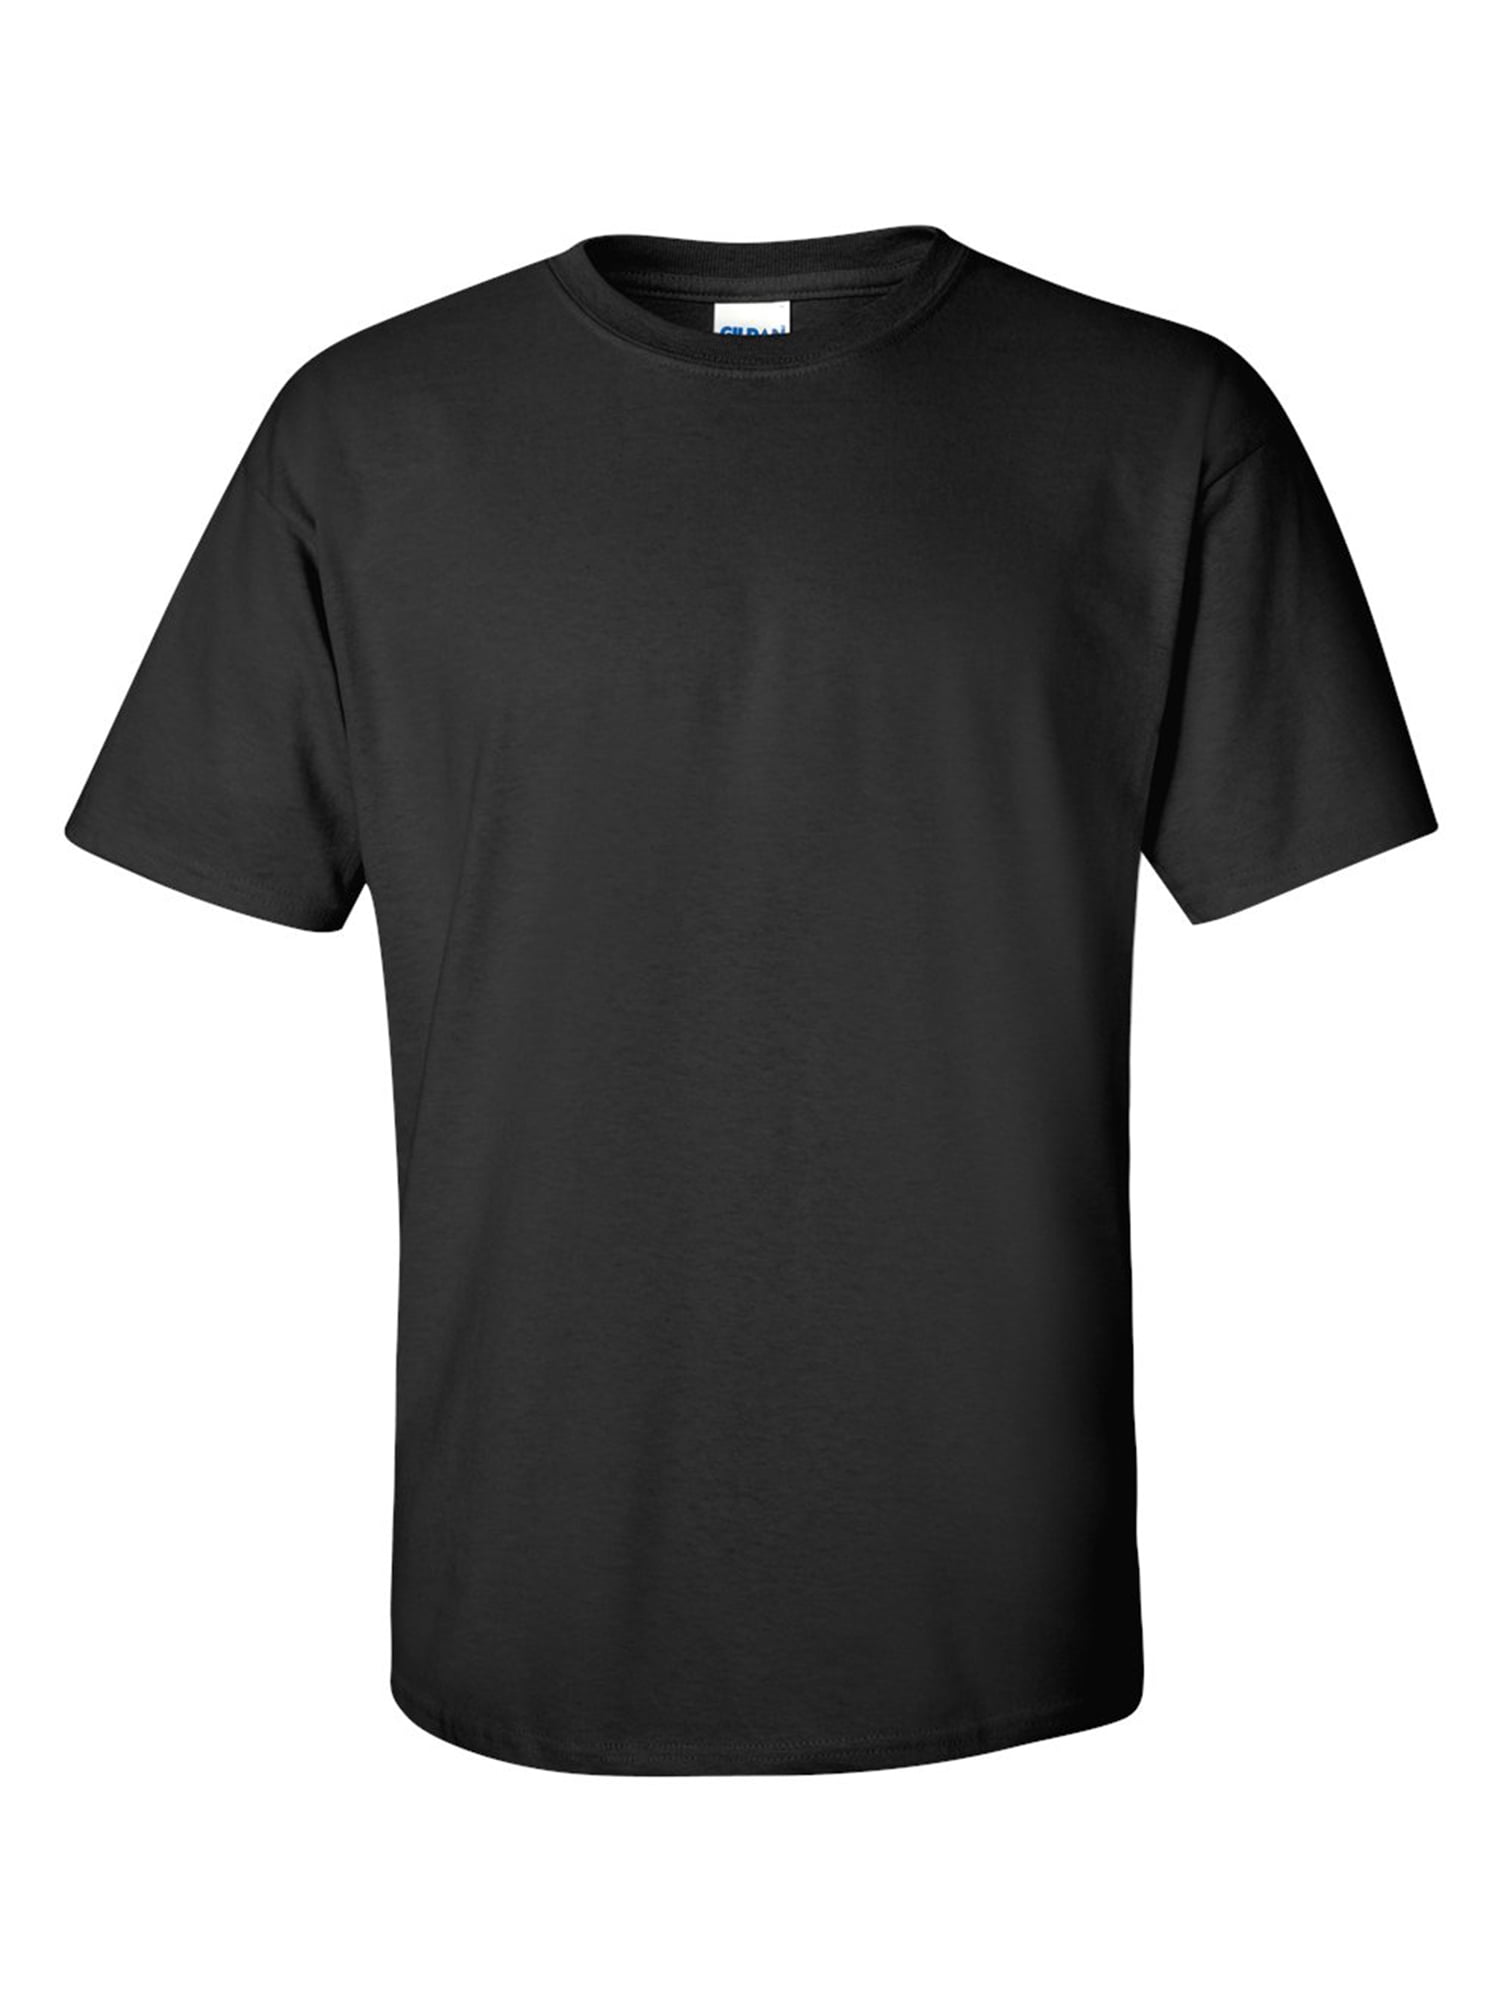 Black T shirts for Men - Gildan 2000 - Men Shirt Cotton Men Shirts Mens ...